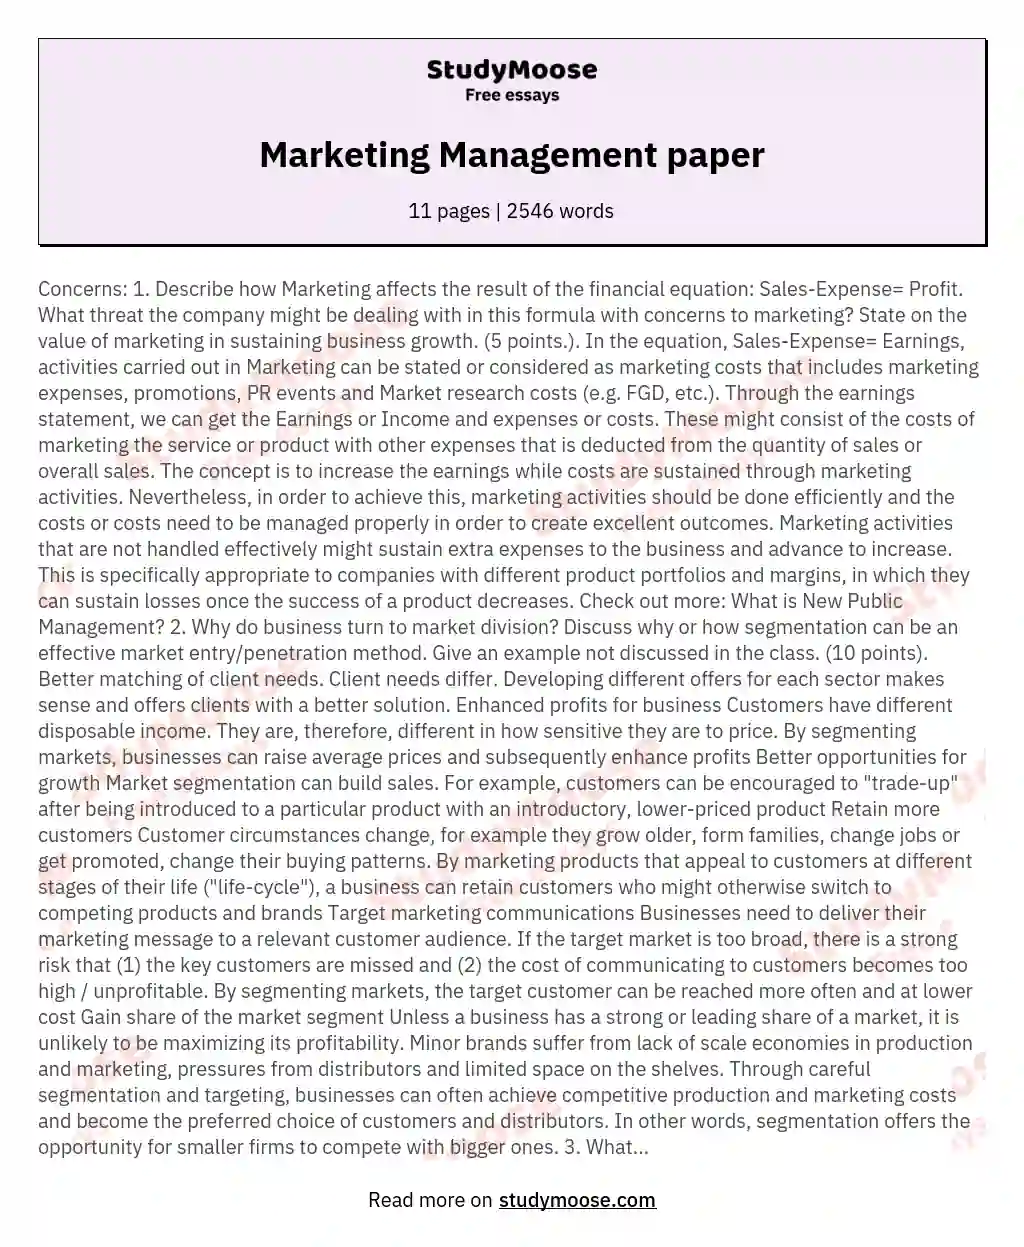 write an essay about marketing management